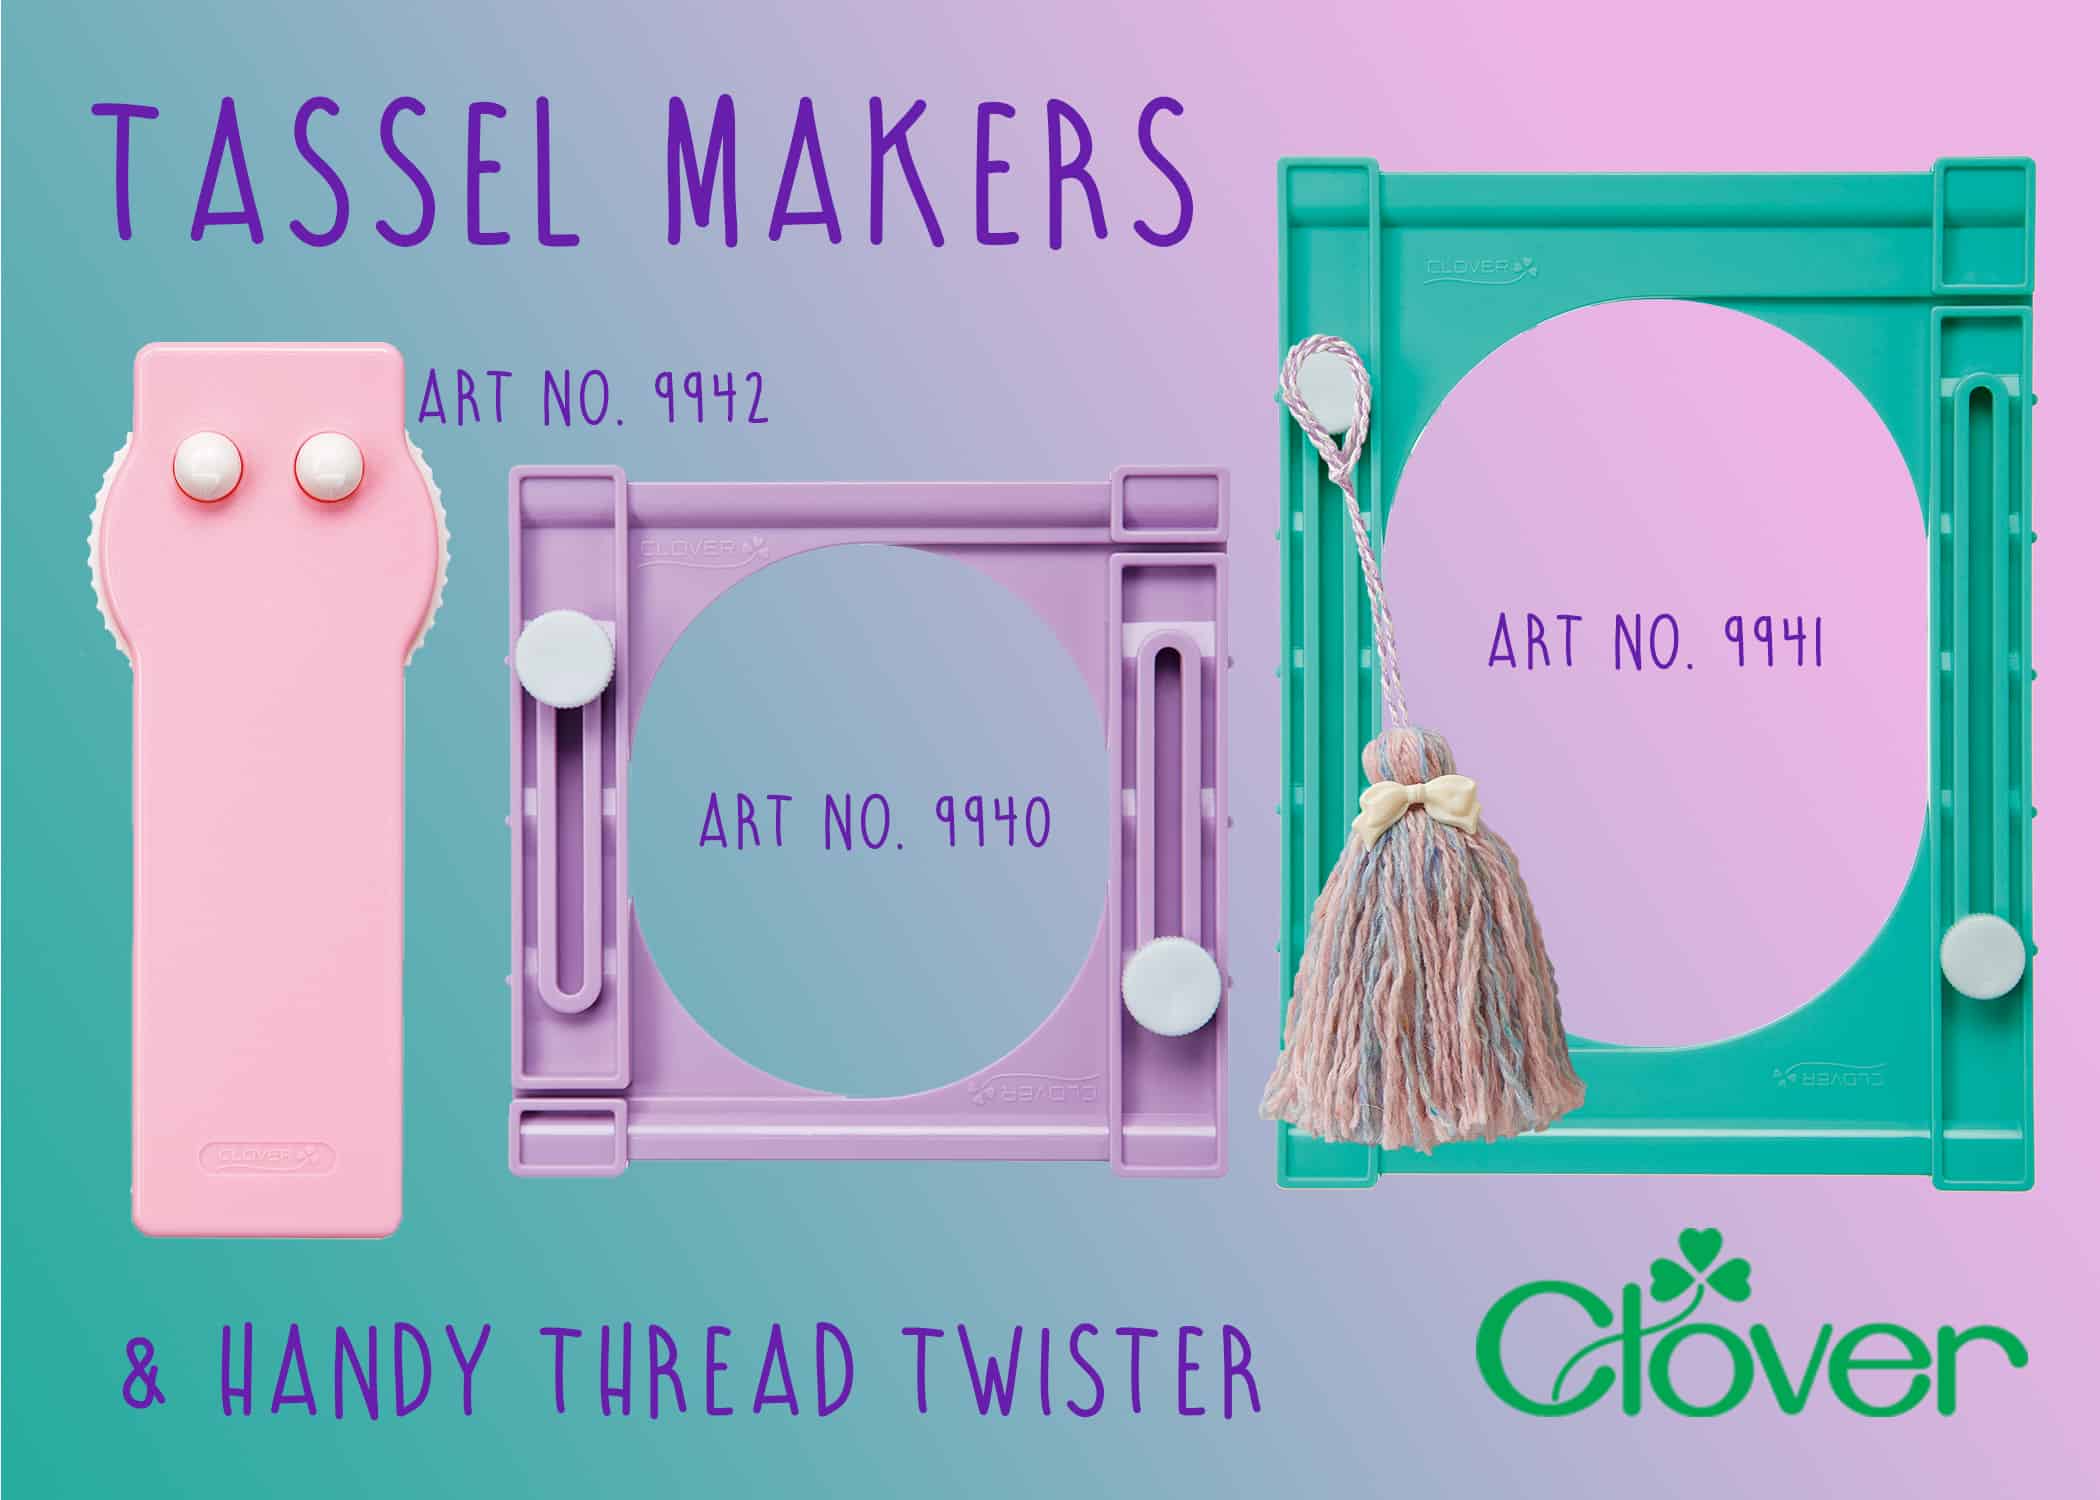 Clover Tassel Maker & Handy Thread Twister